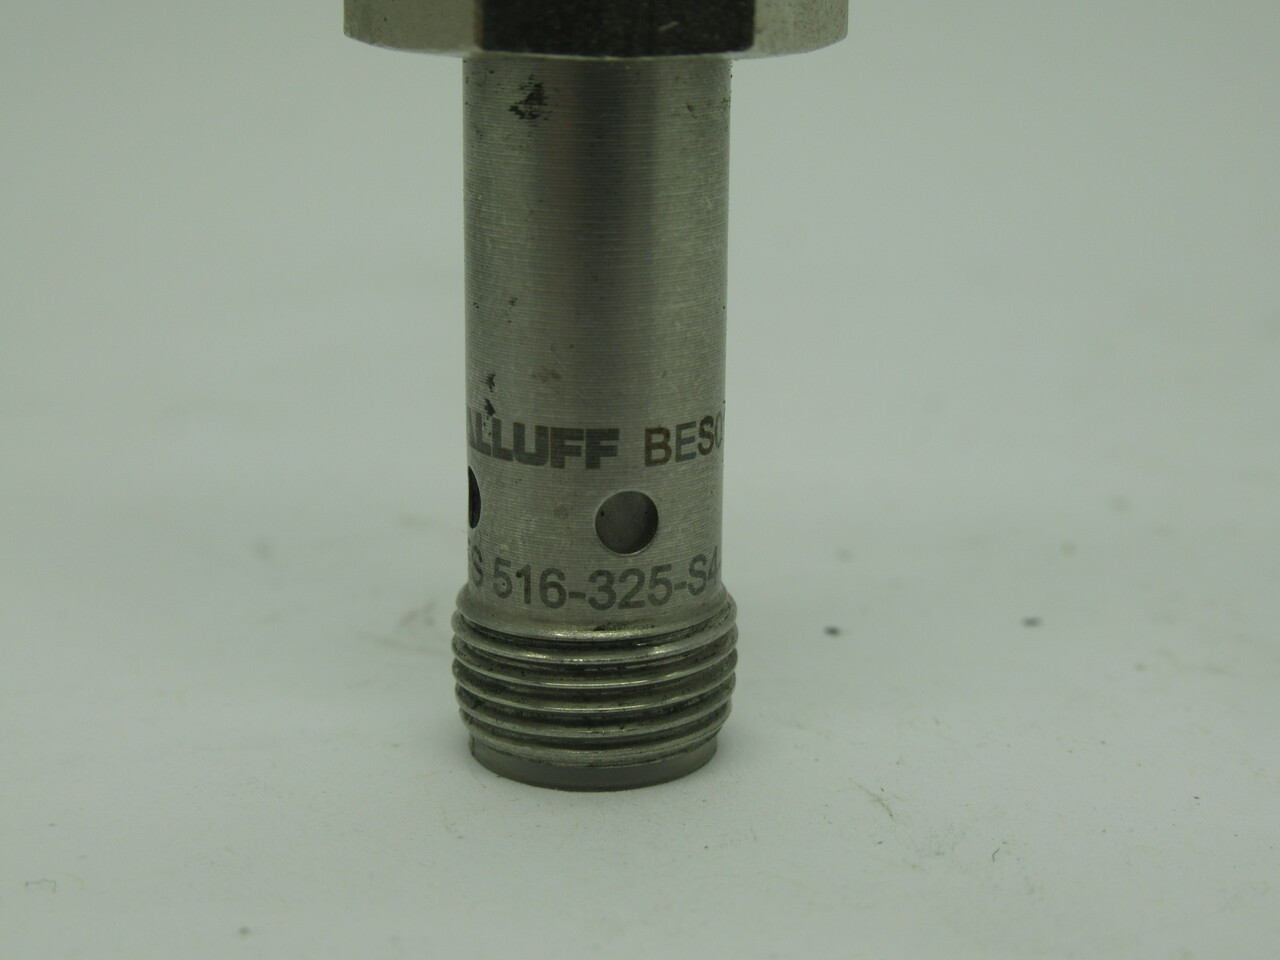 Balluff BES-516-325-S4-C Inductive Sensor 10-30VDC 2mm Range BES01C8 USED